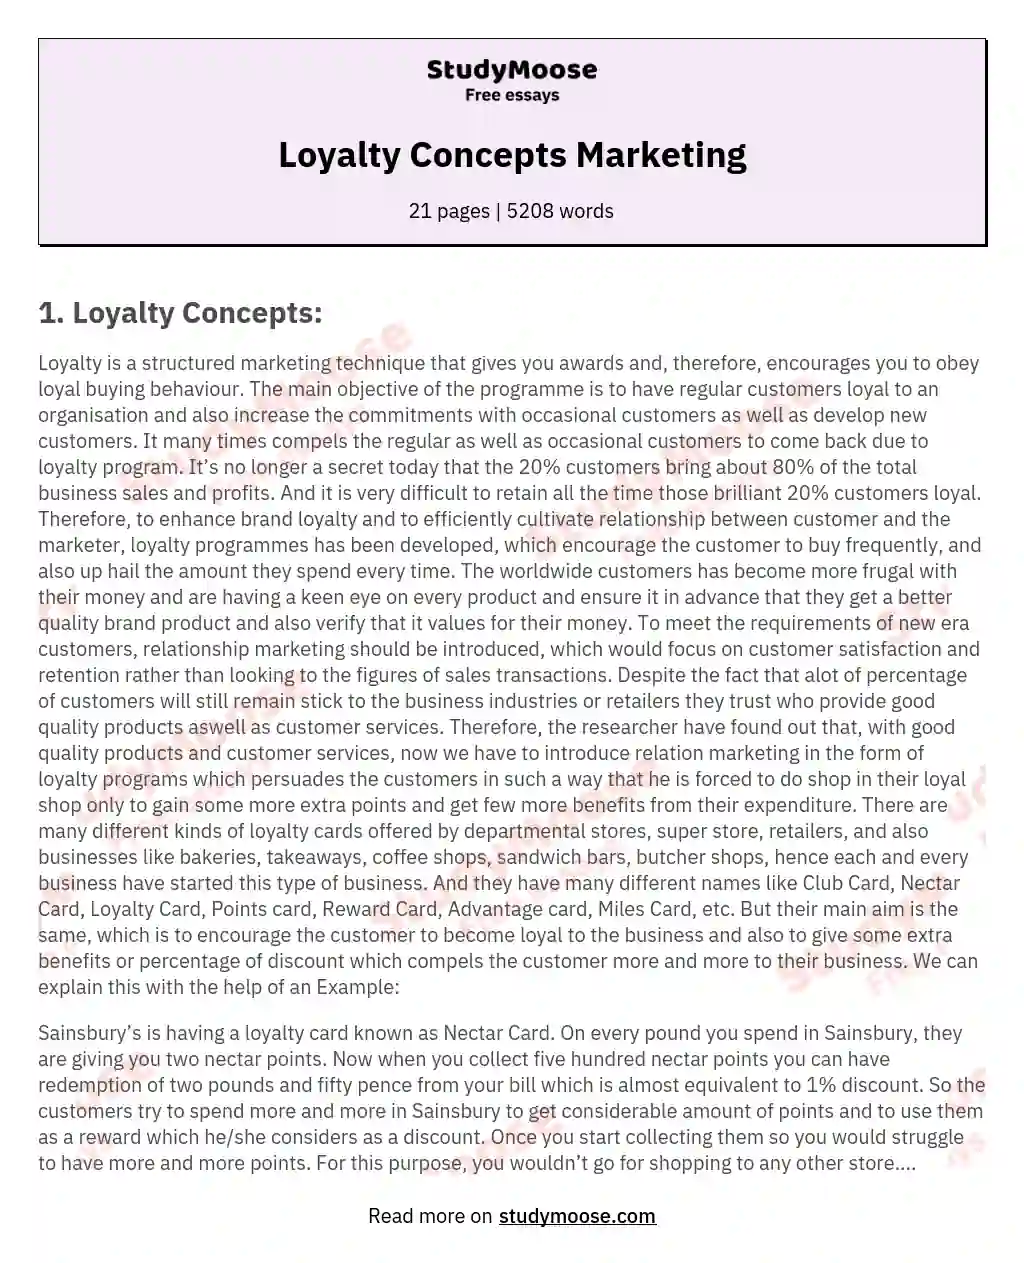 Loyalty Concepts Marketing essay